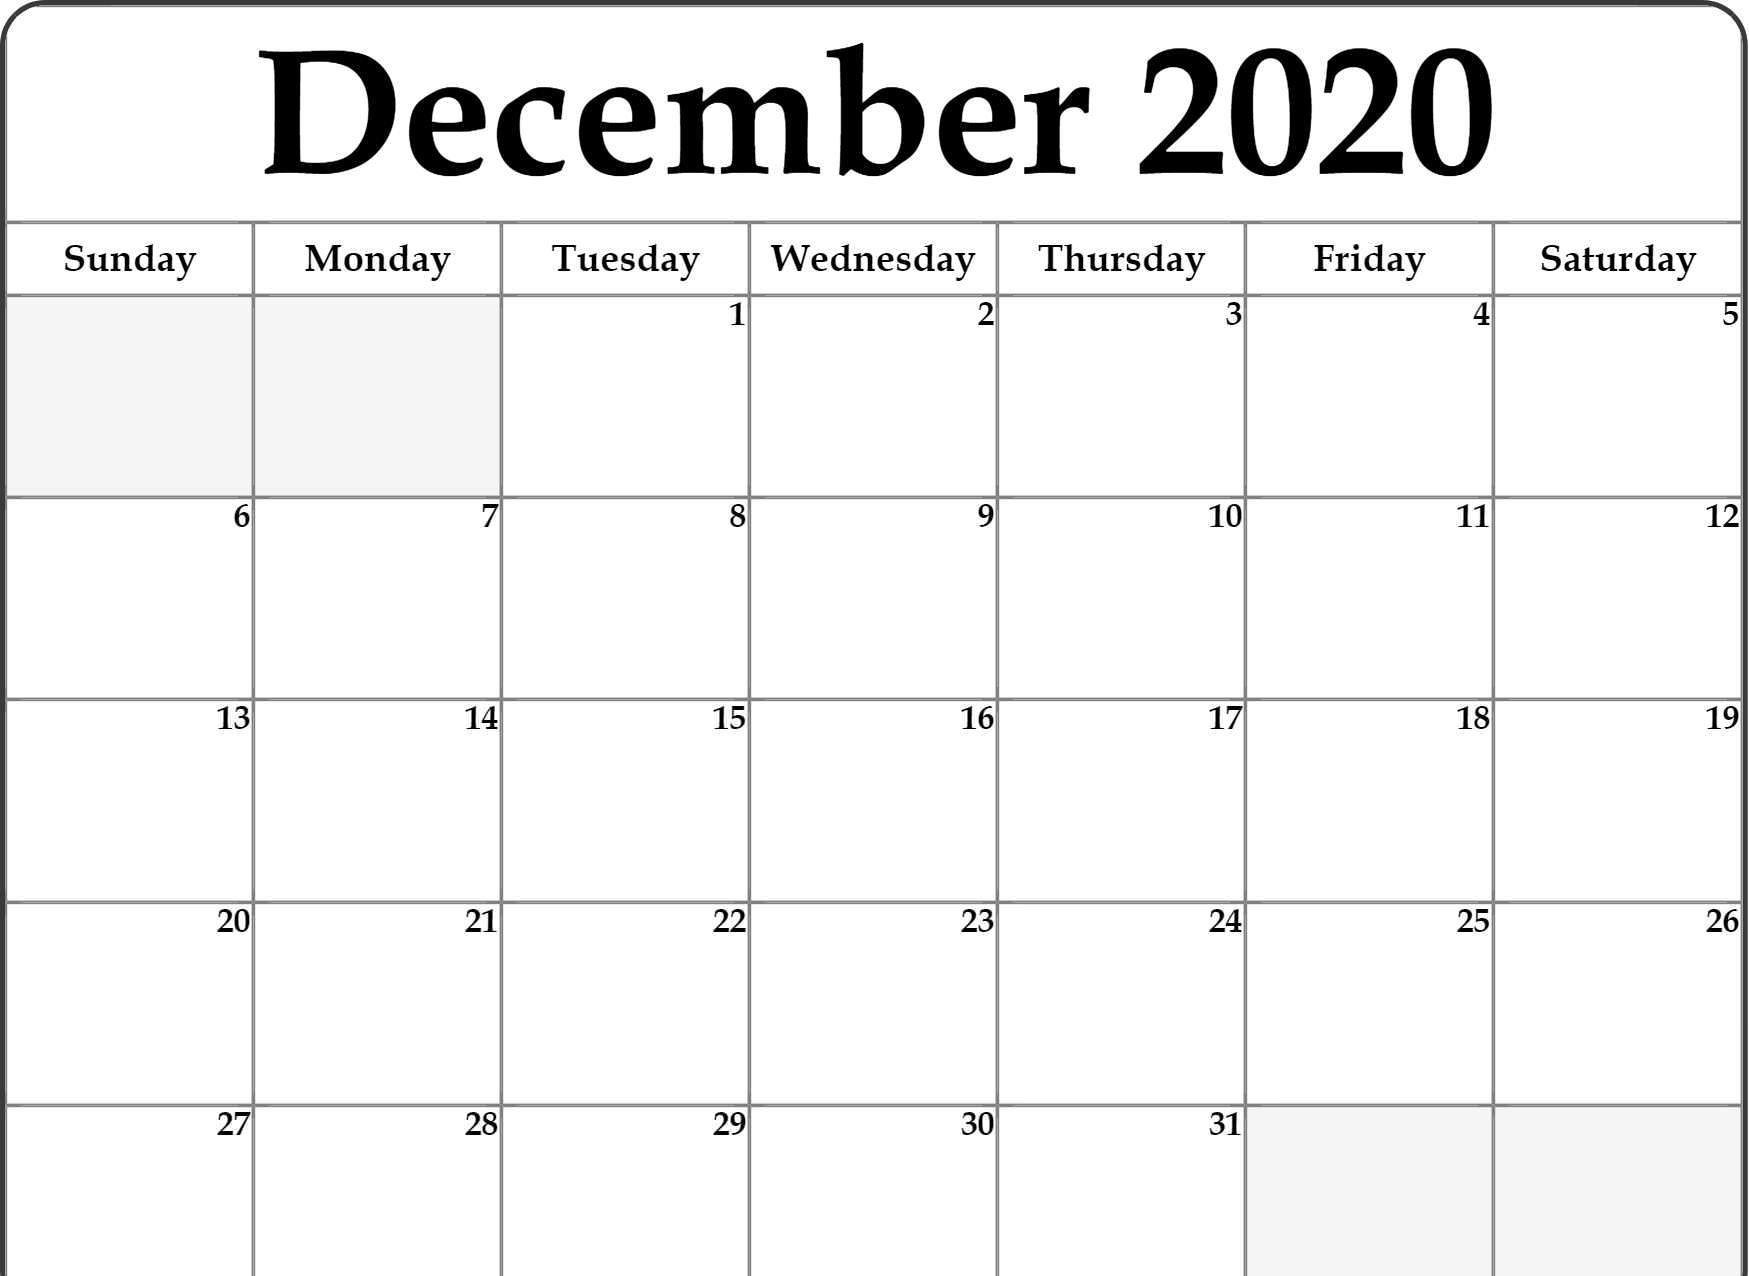 December 2020 Calendar Wallpaper Free December 2020